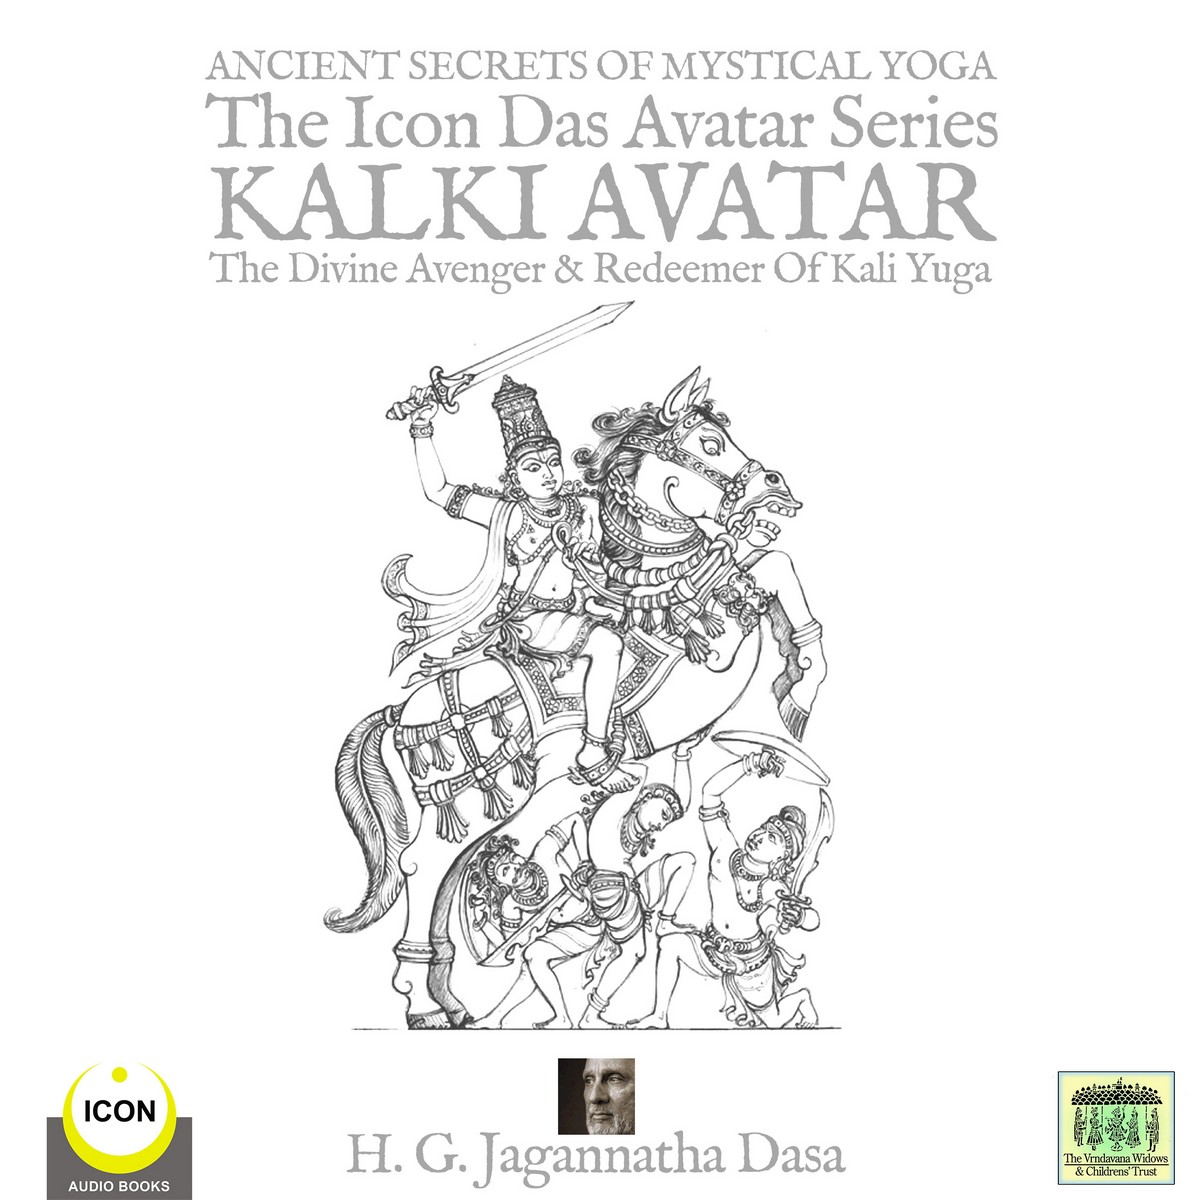 Ancient Secret’s Of Mystical Yoga The Icon Das Avatar Series Kalki Avatar – The Divine Avenger & Redeemer Of Kali Yuga